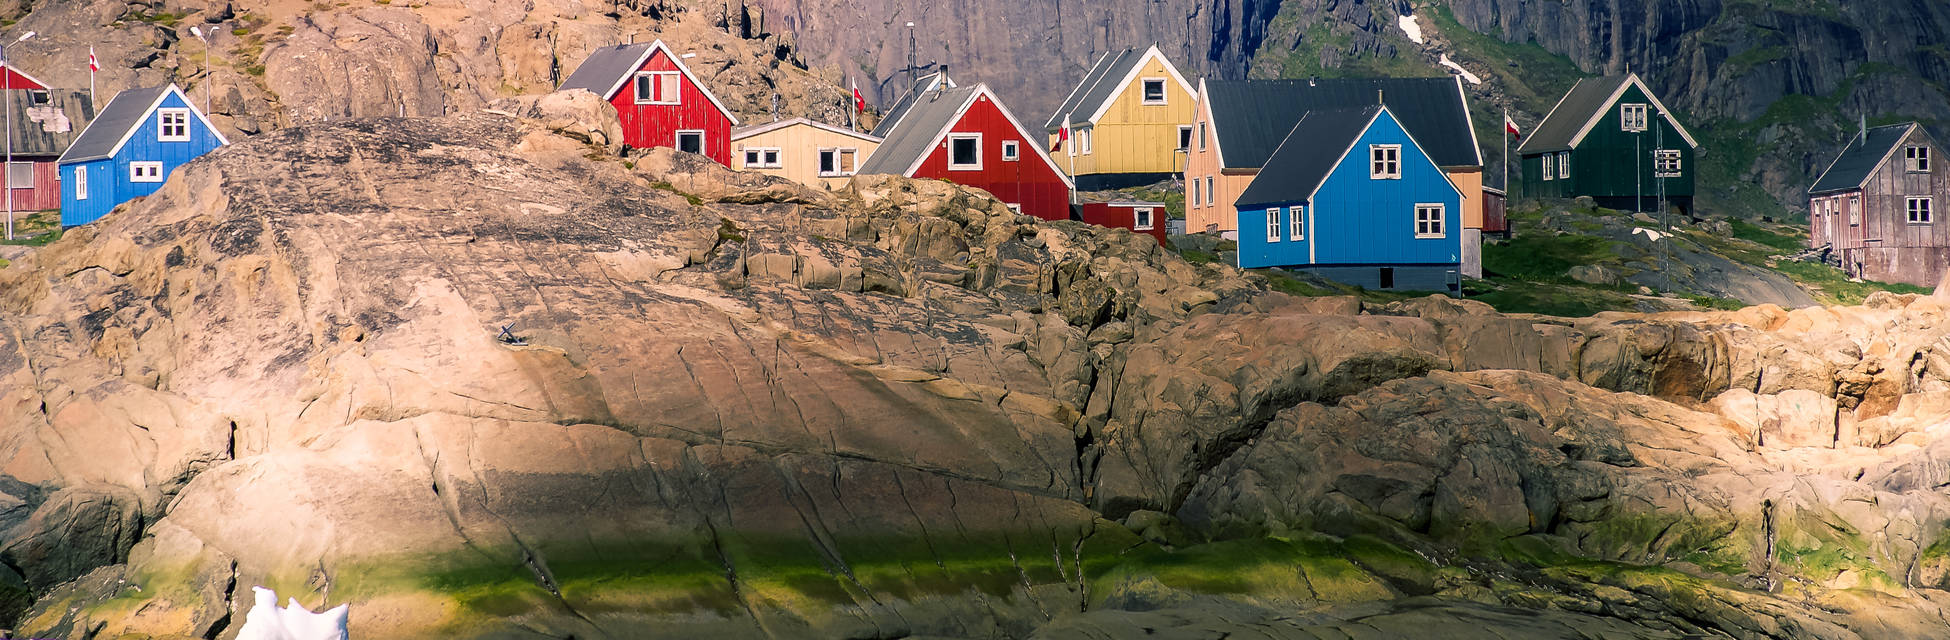 Groenland-huisjes-AdobeStock_182871073-89c7a37c.jpg